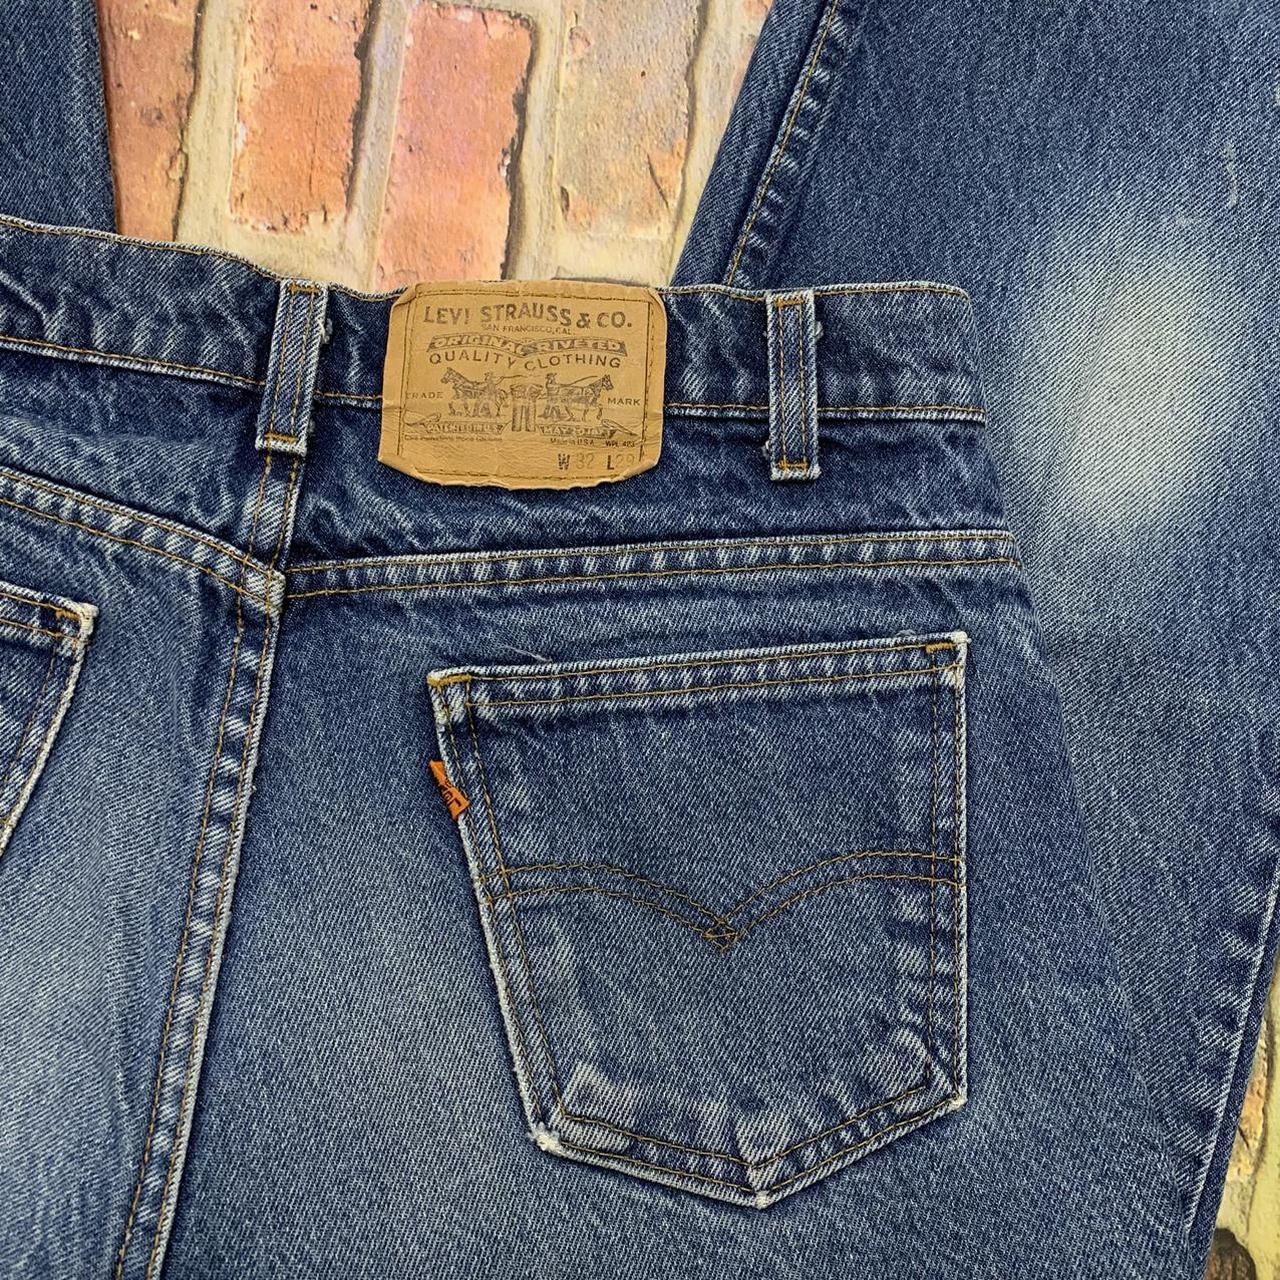 Vintage Levi’s 509 Orange Tab jeans in blue. From... - Depop